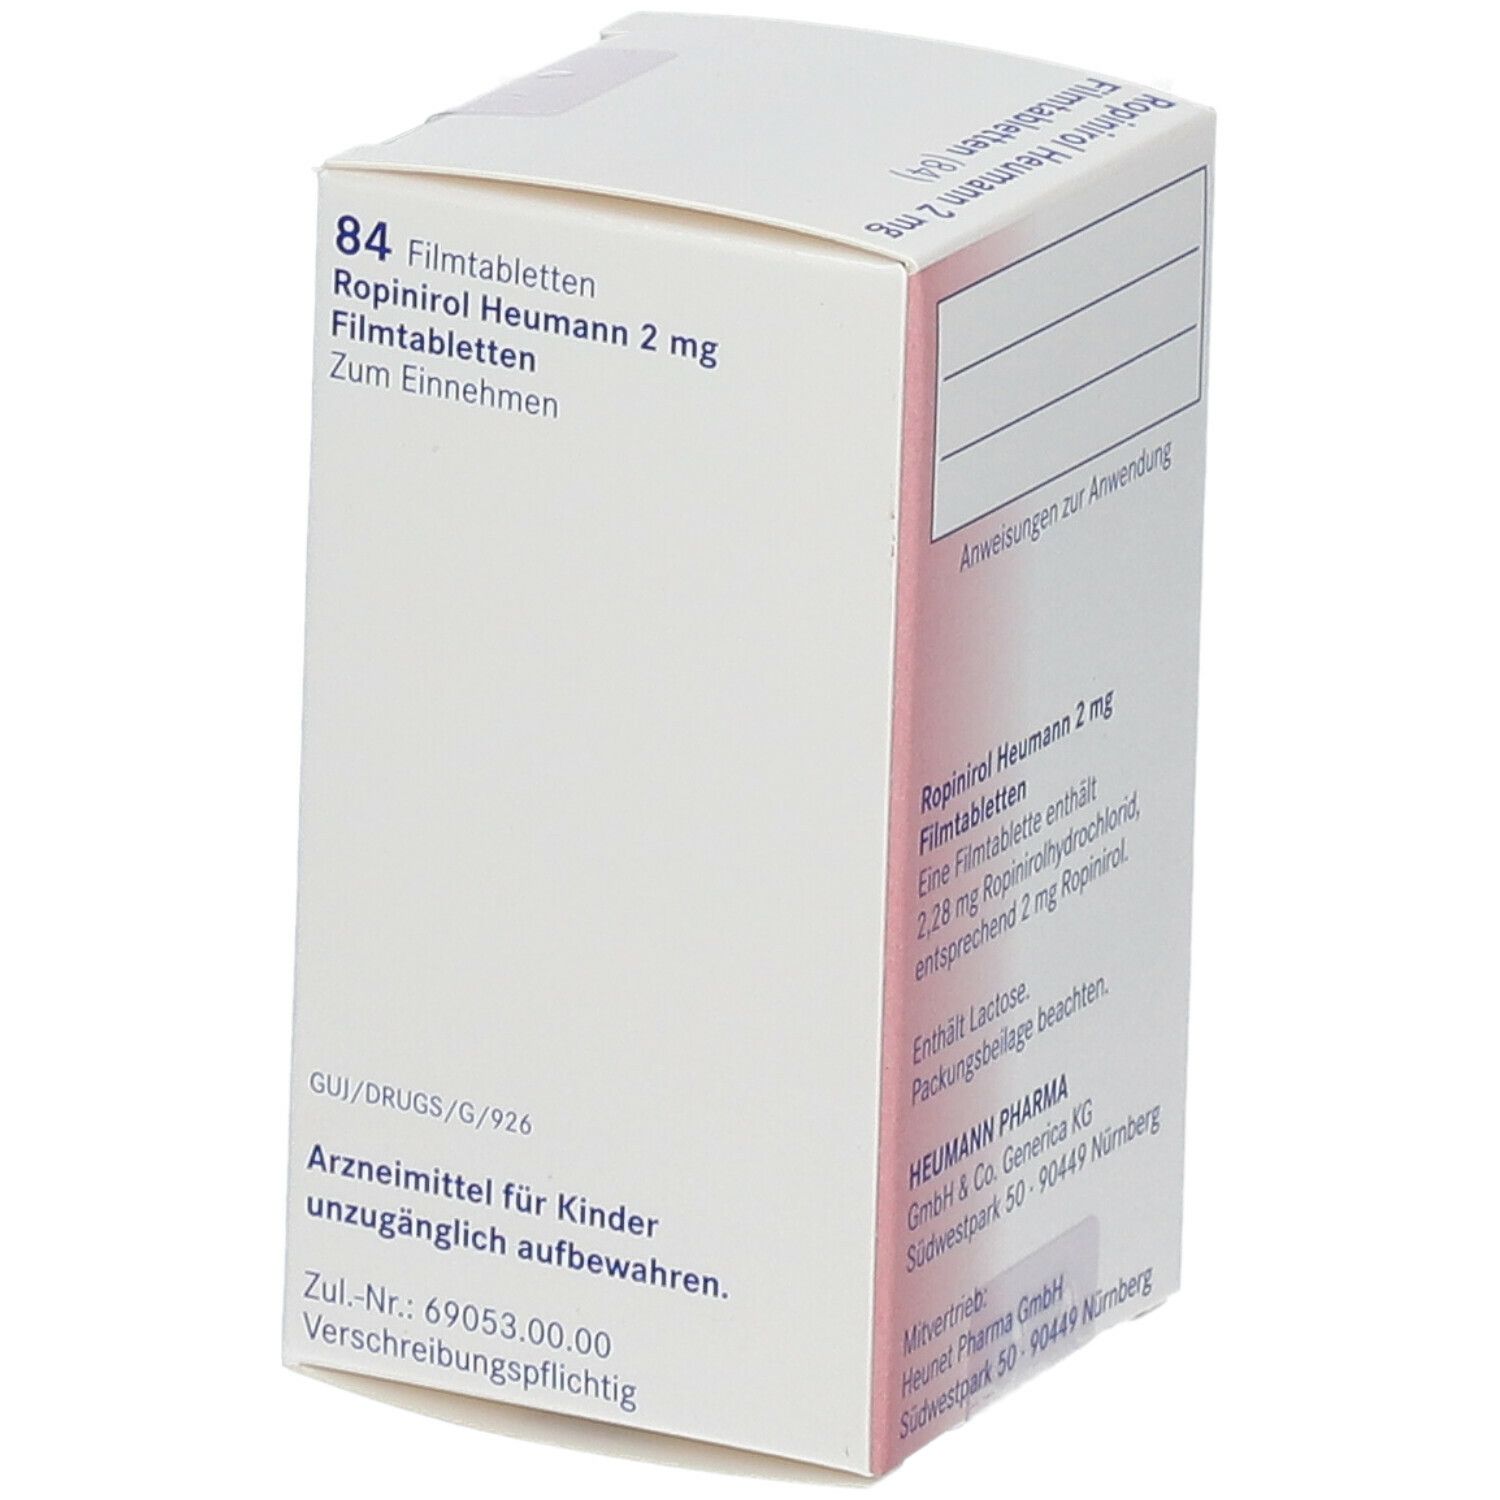 Ropinirol Heumann 2 mg